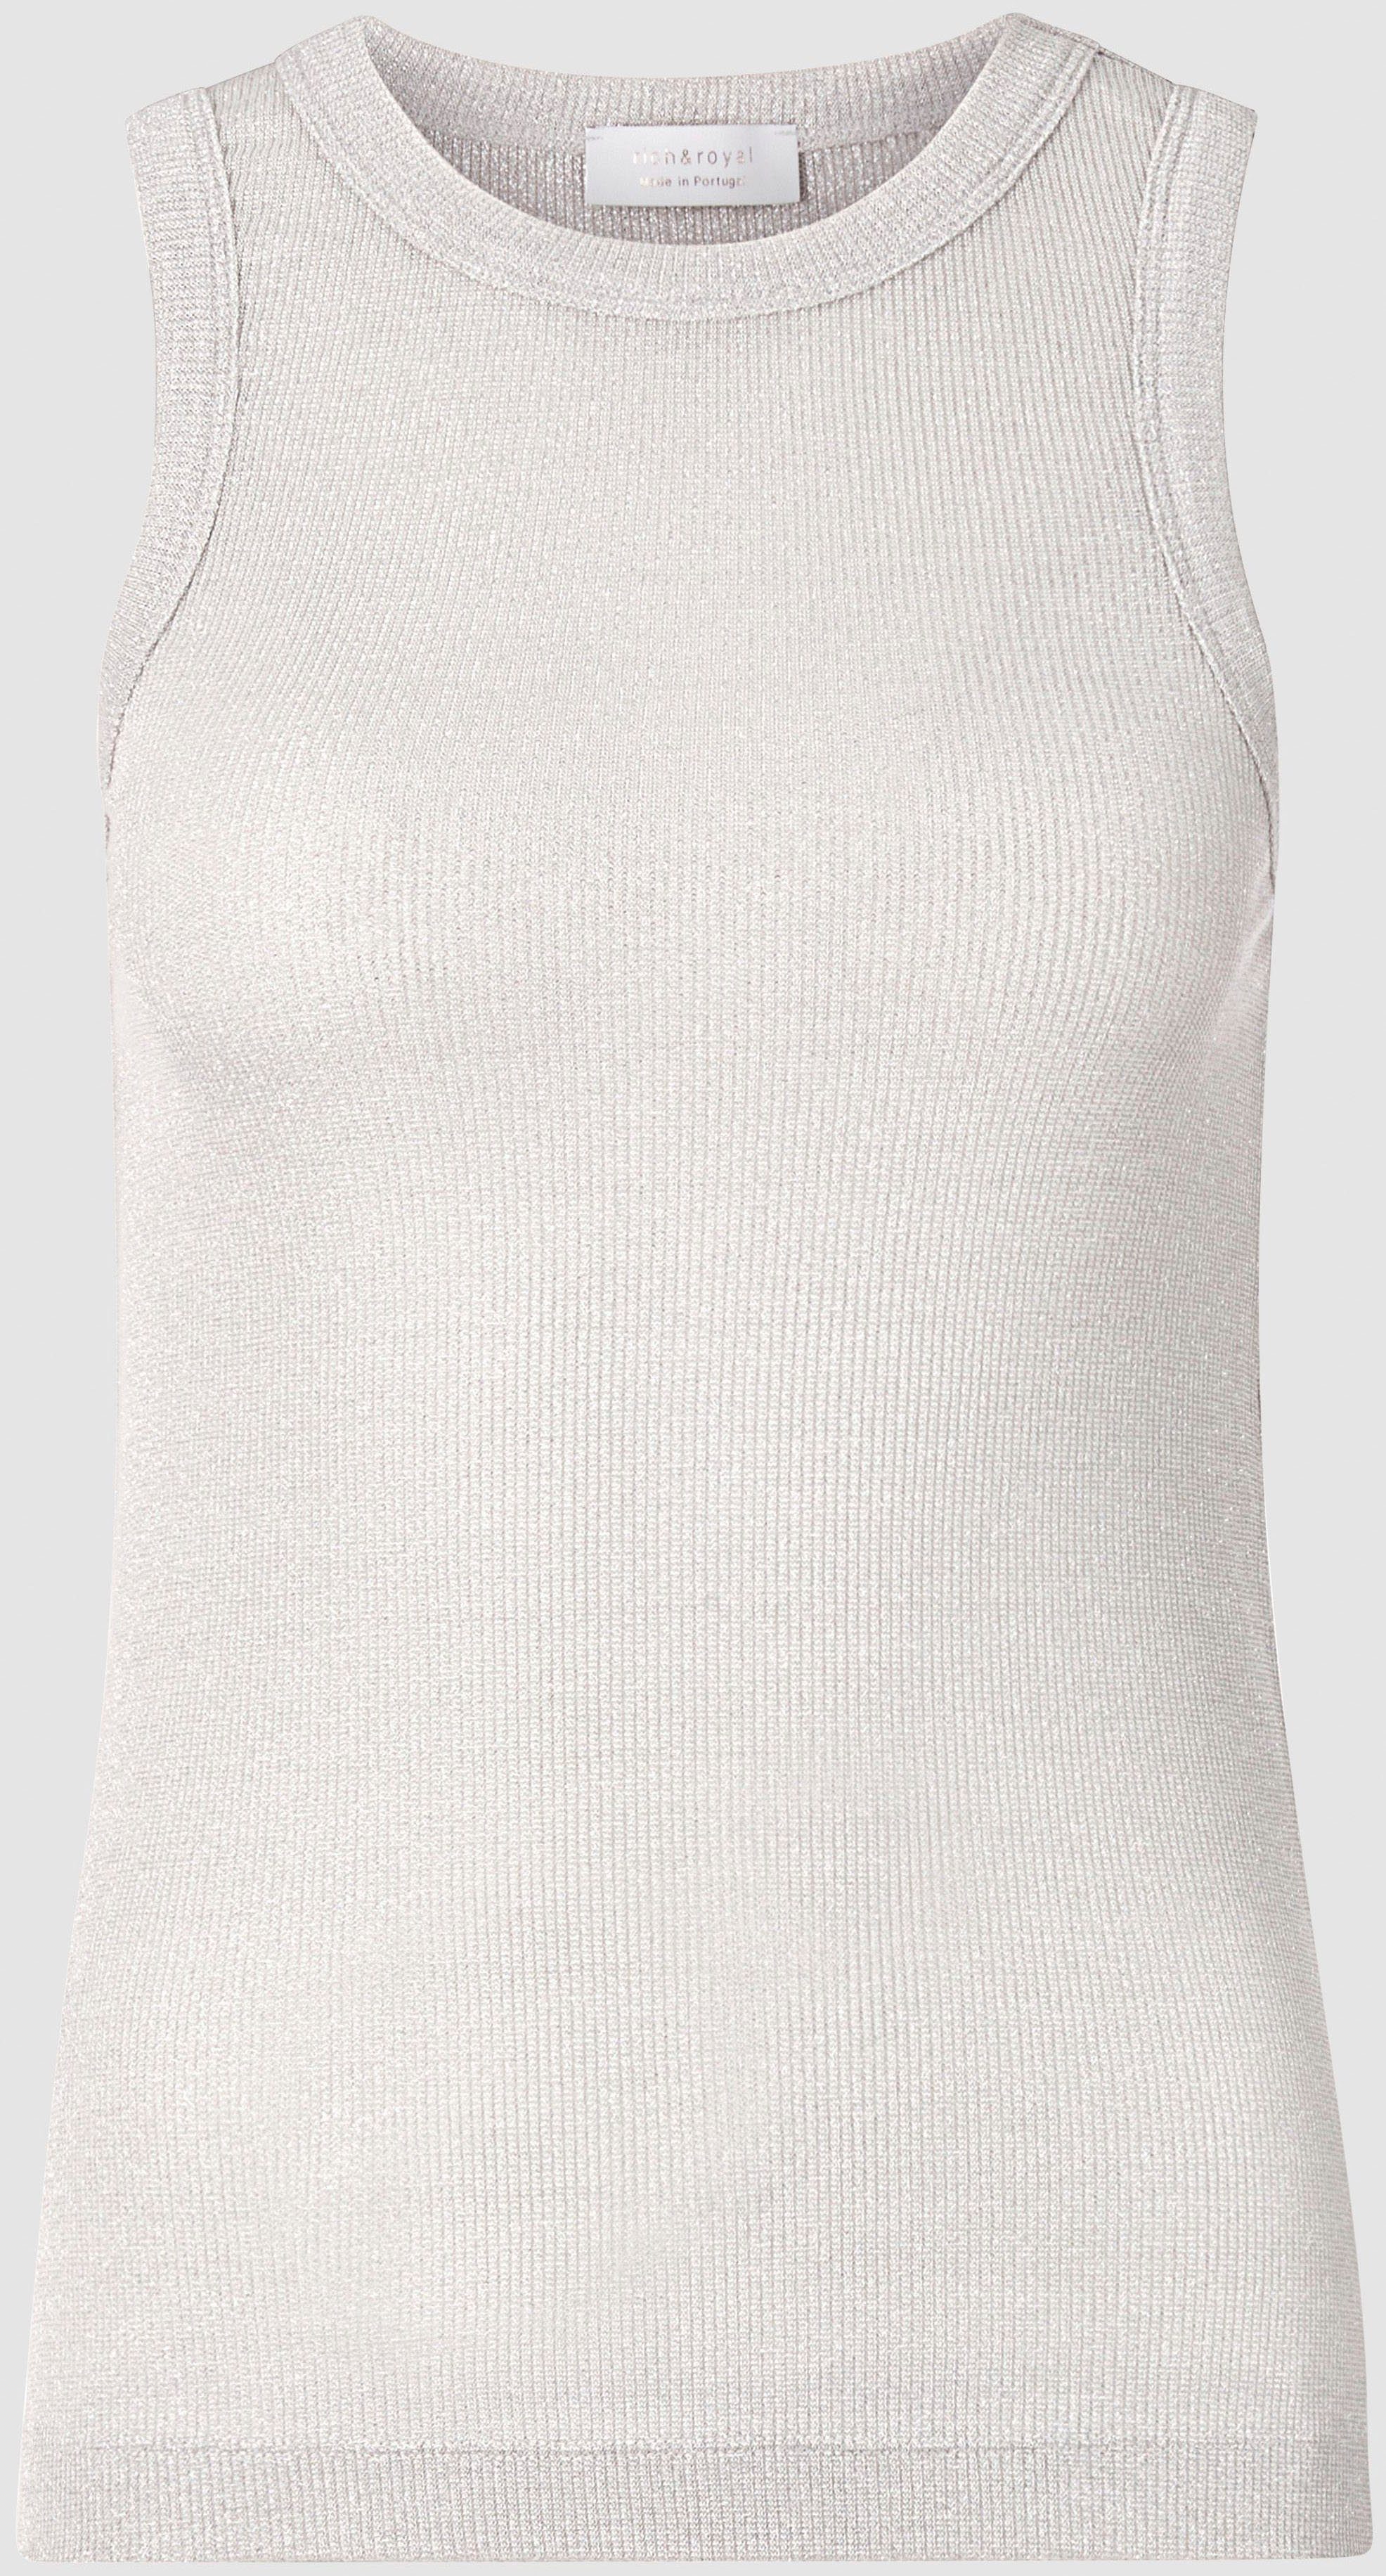 Rich & Royal Shirttop aus white pearl schimmerndem Material